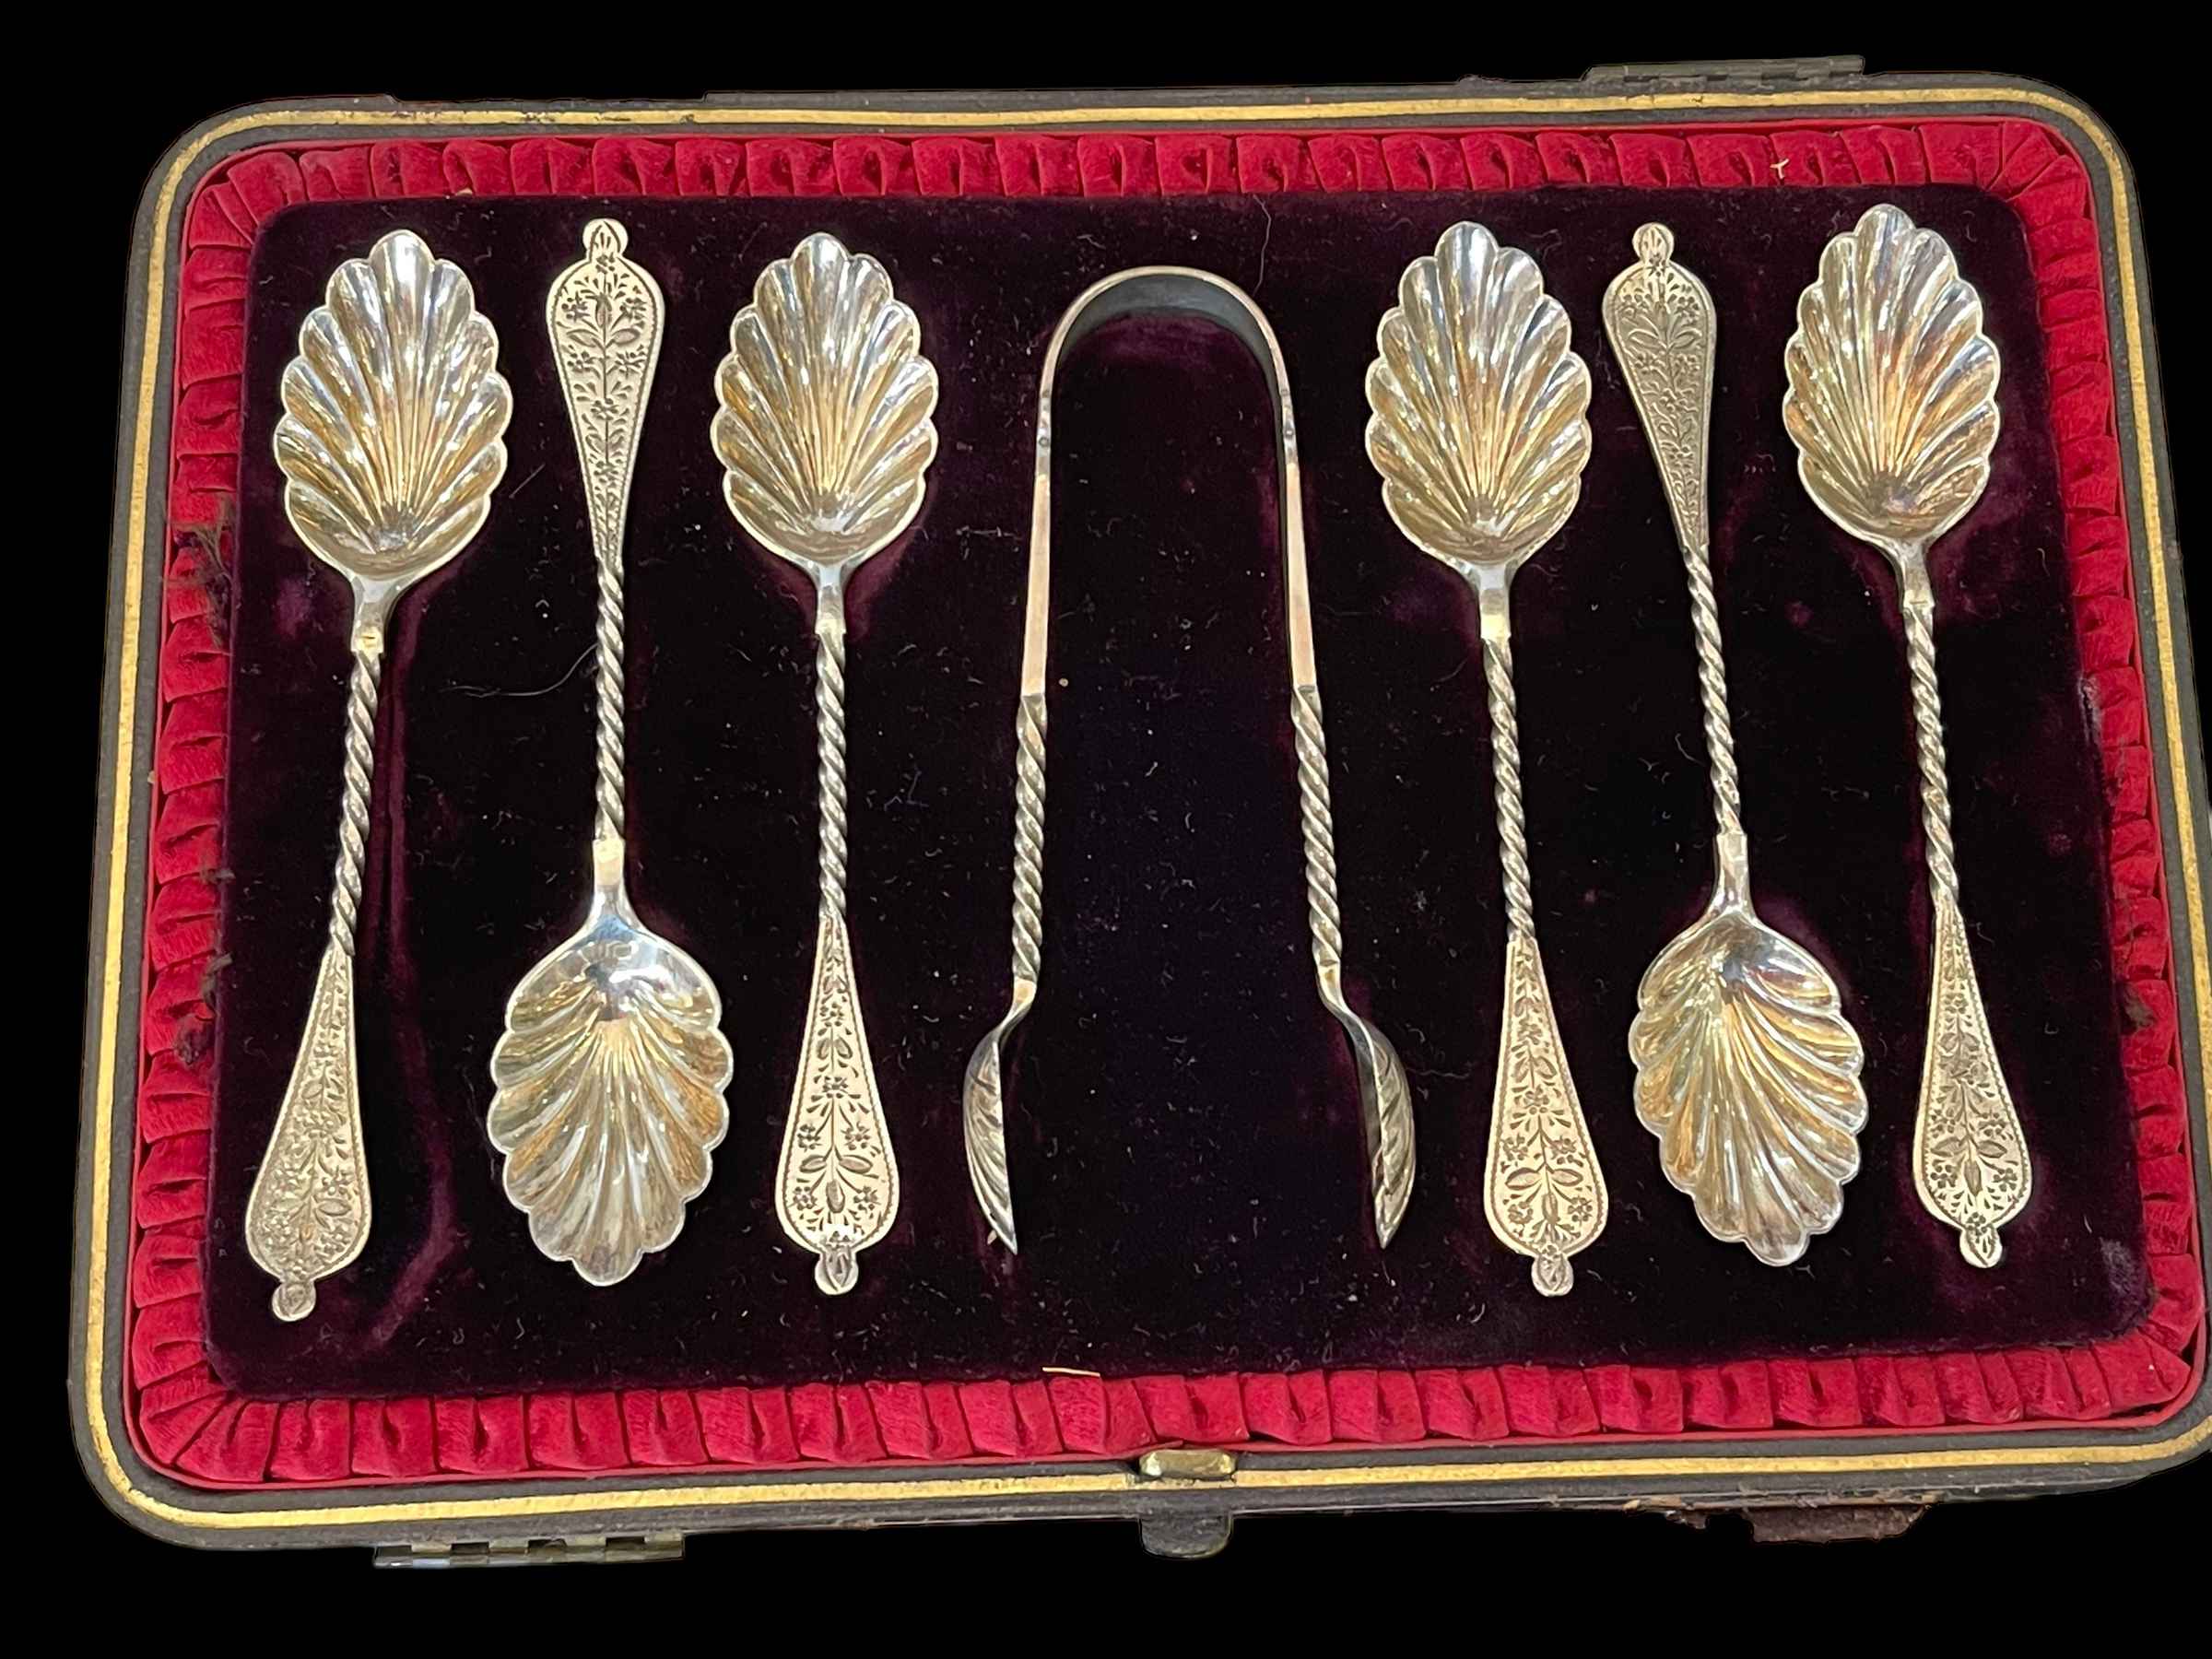 Hilliard & Thomason silver set of ornate shell bowl teaspoons and tongs, cased, Birmingham 1888.